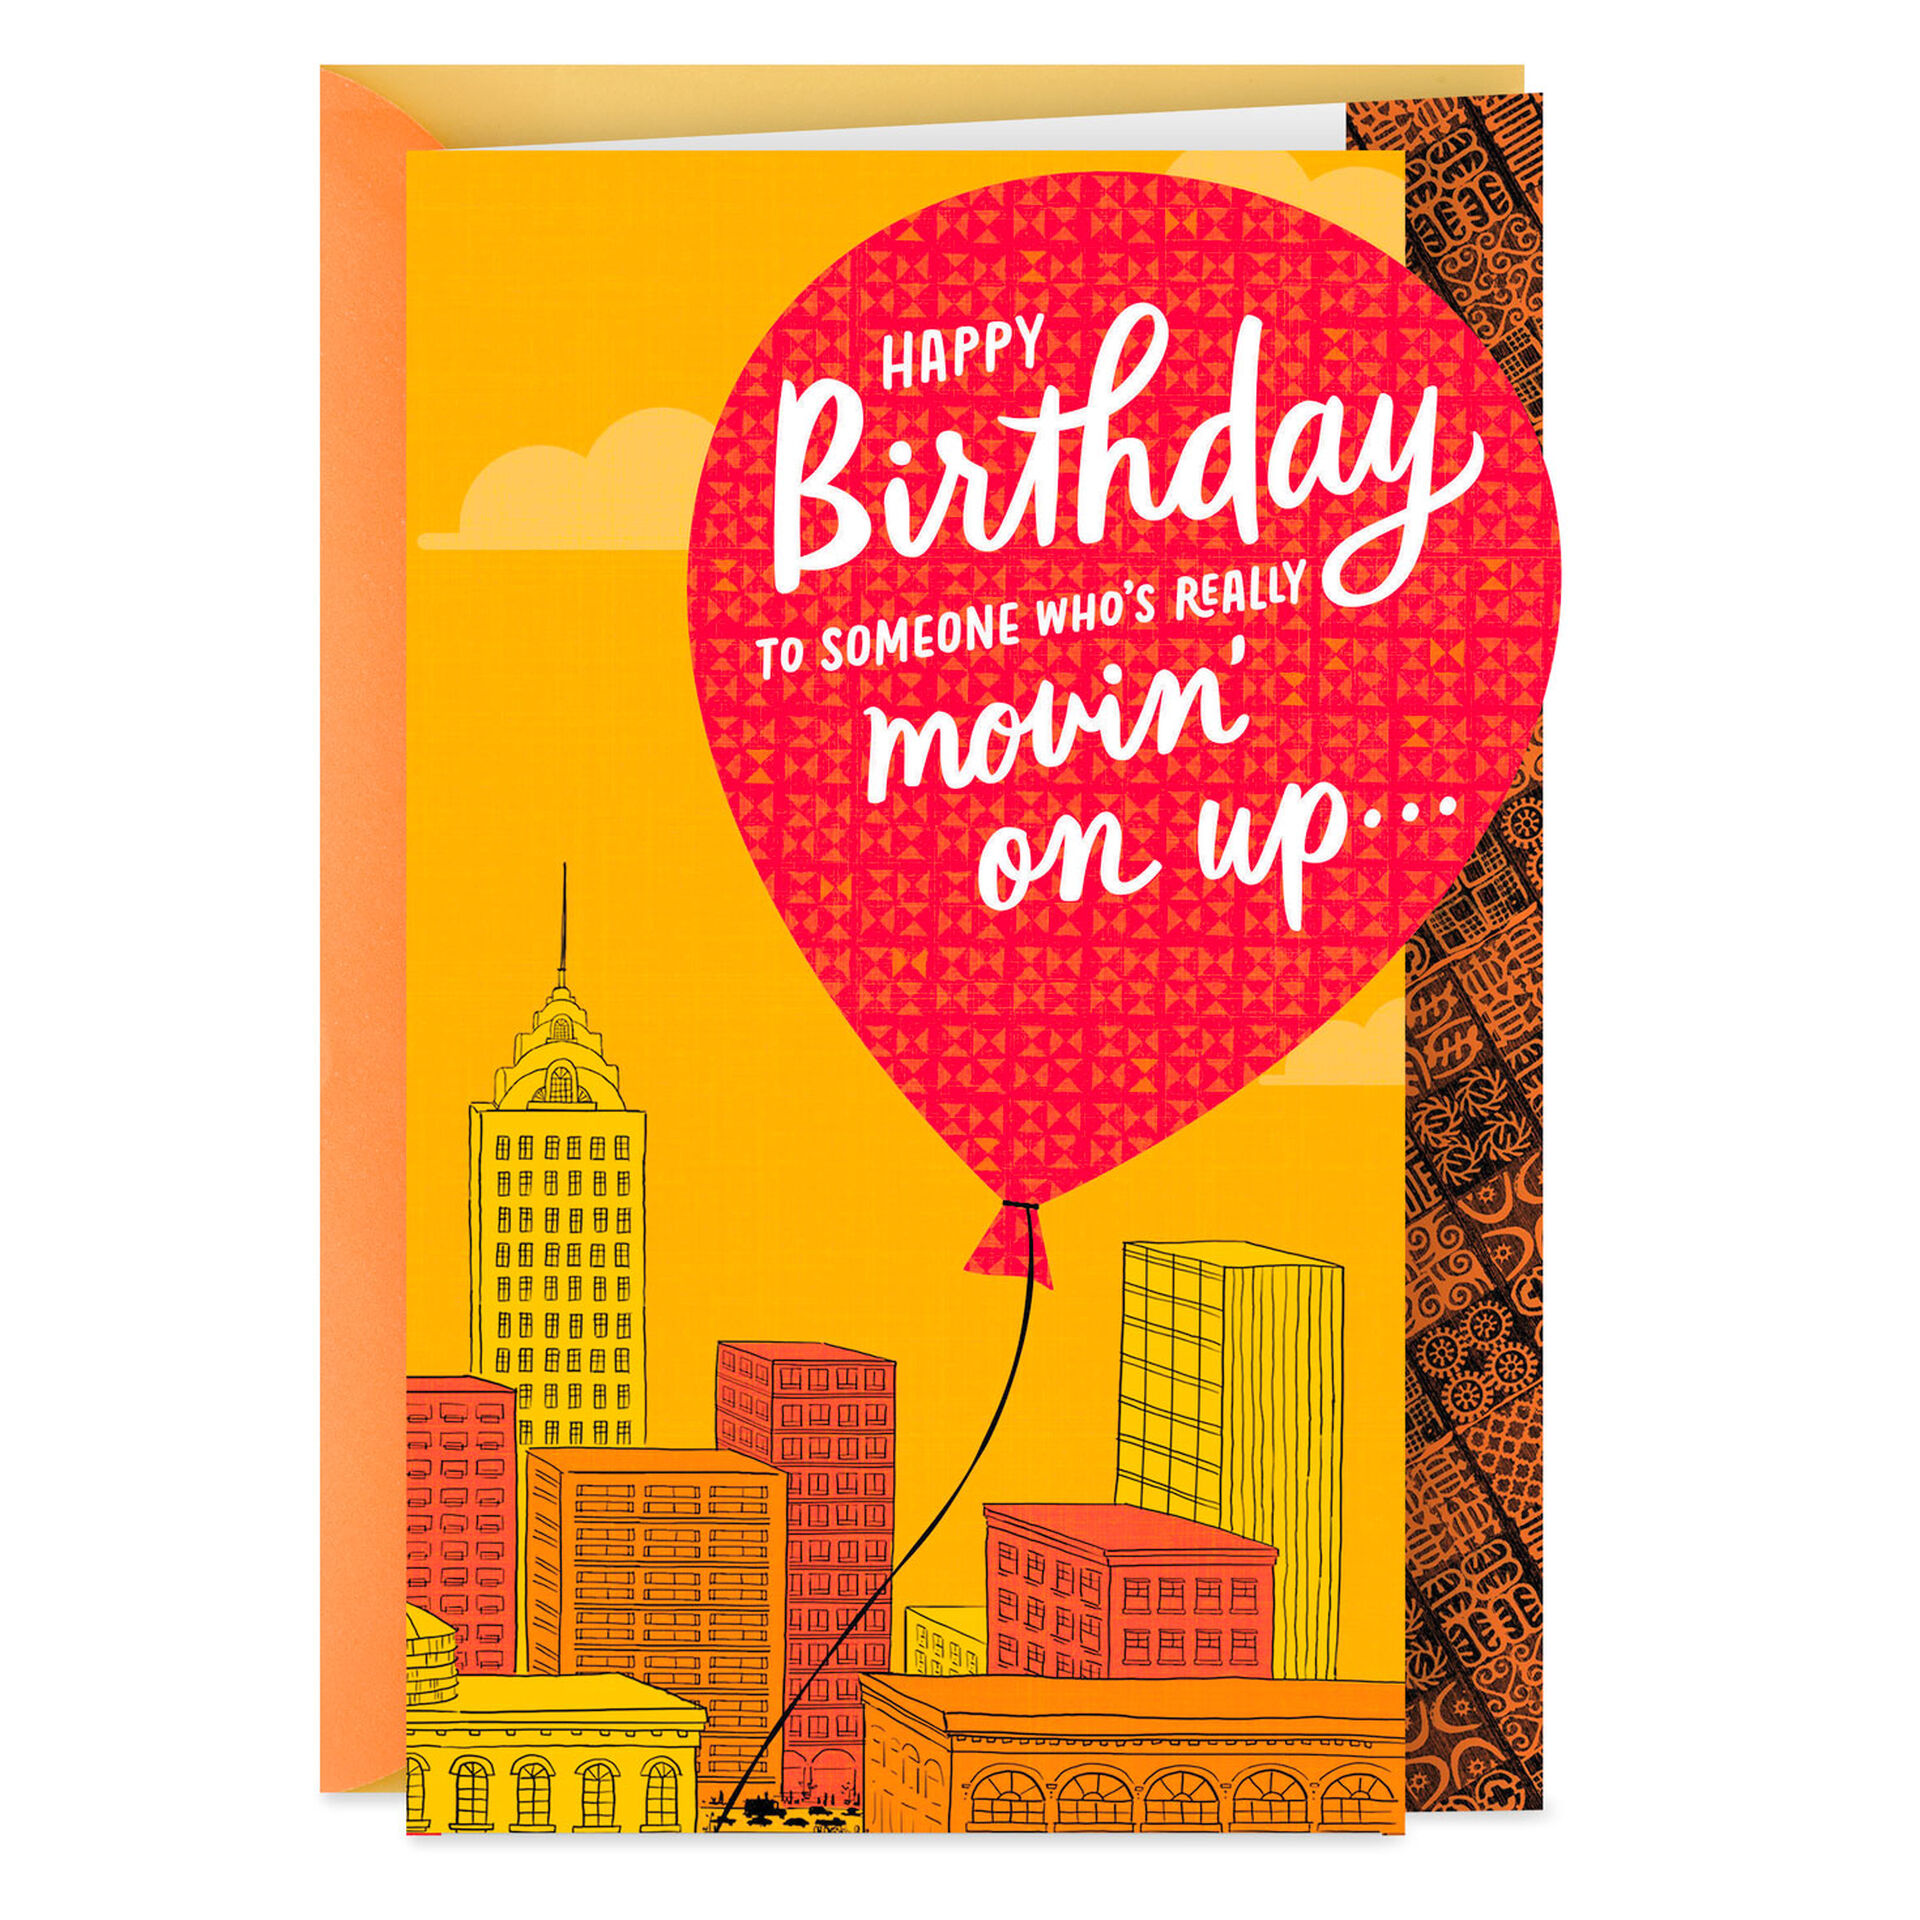 Balloon-and-City-Buildings-Funny-Birthday-Card_259MHB9983_01